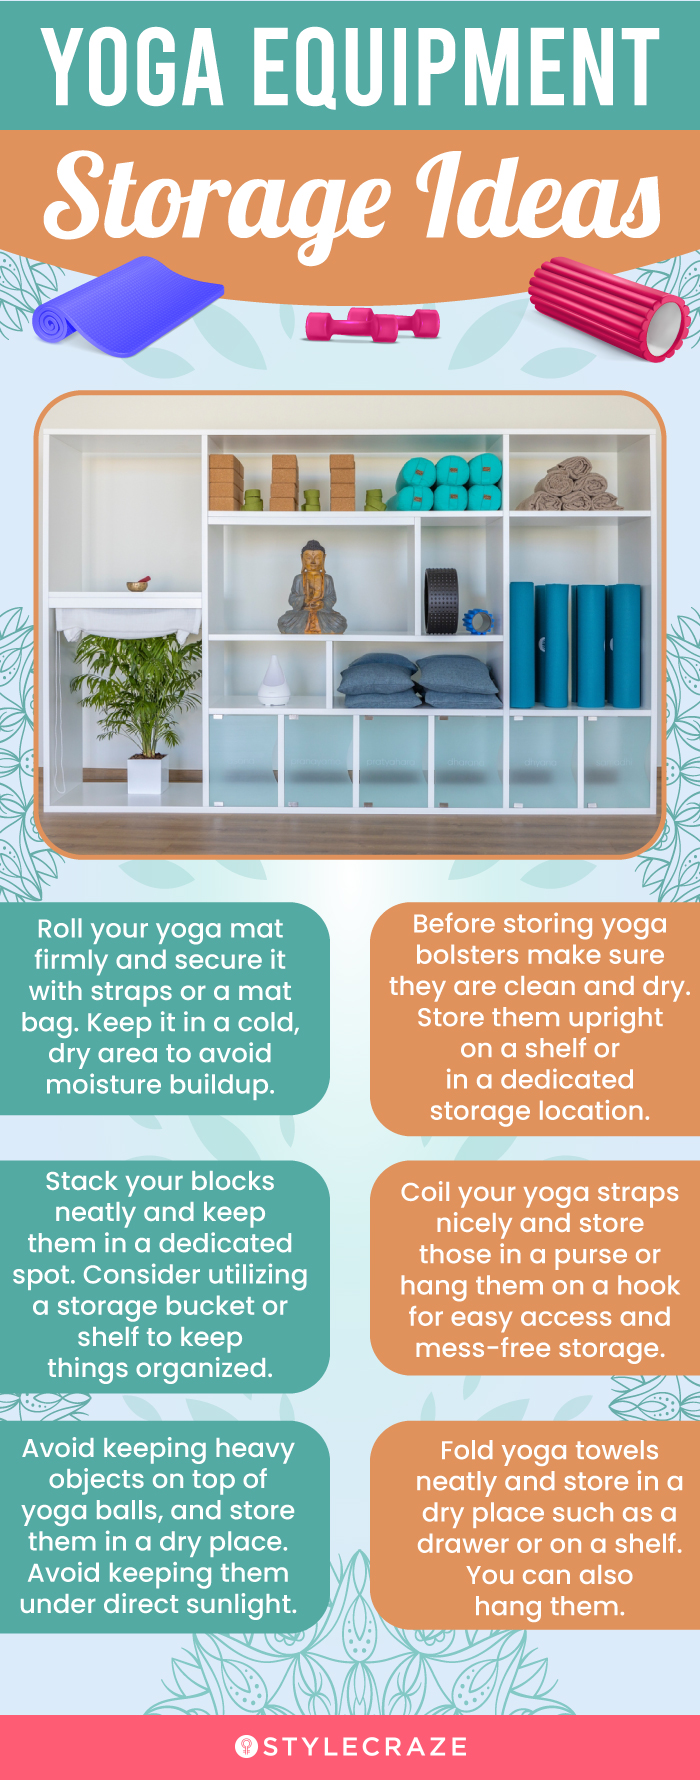 Yoga Equipment Storage Ideas (infographic)